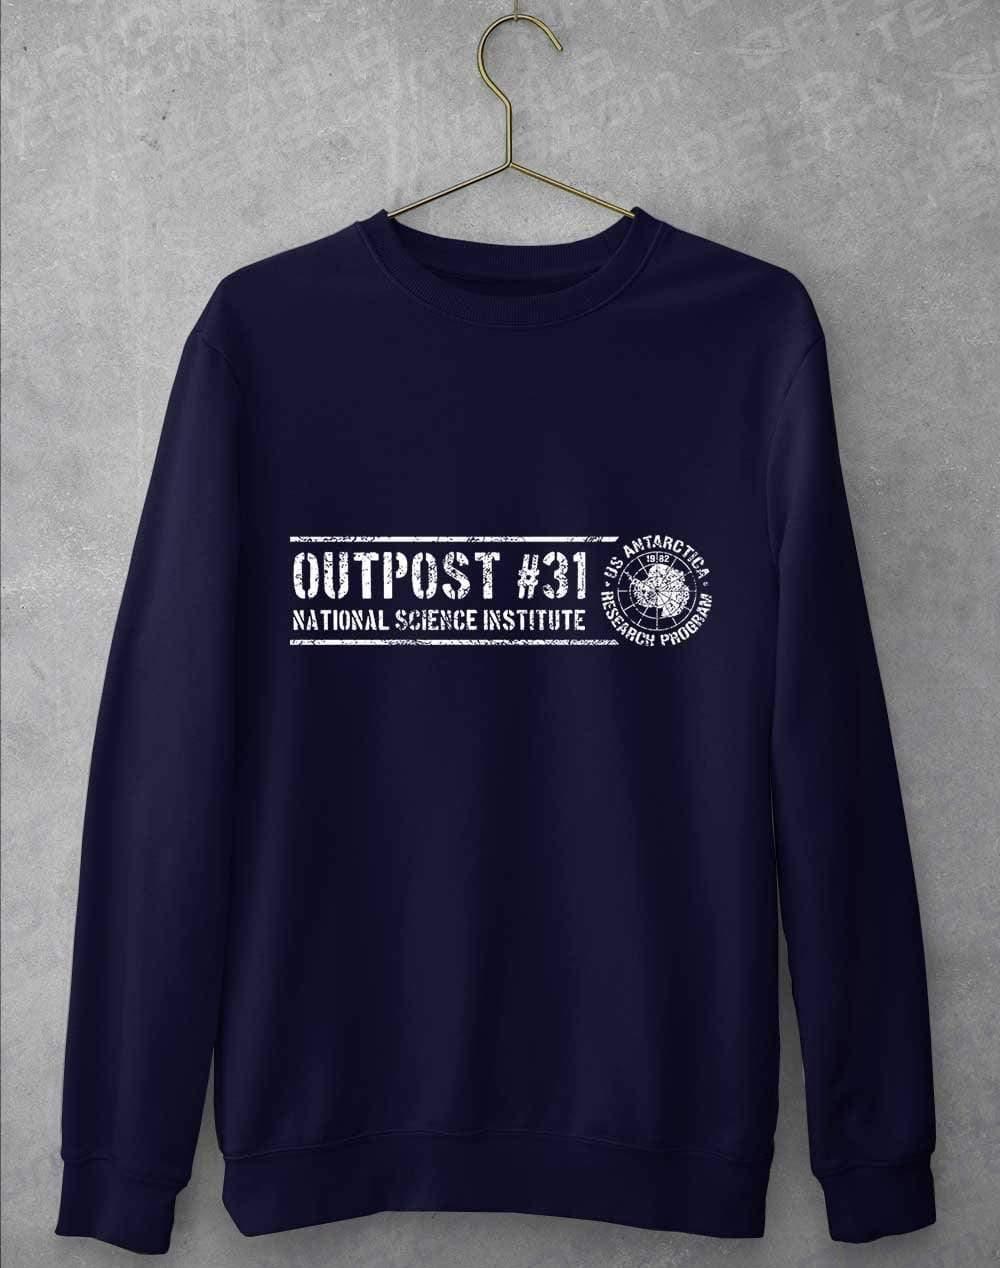 Outpost 31 Antarctica Sweatshirt S / Oxford Navy  - Off World Tees